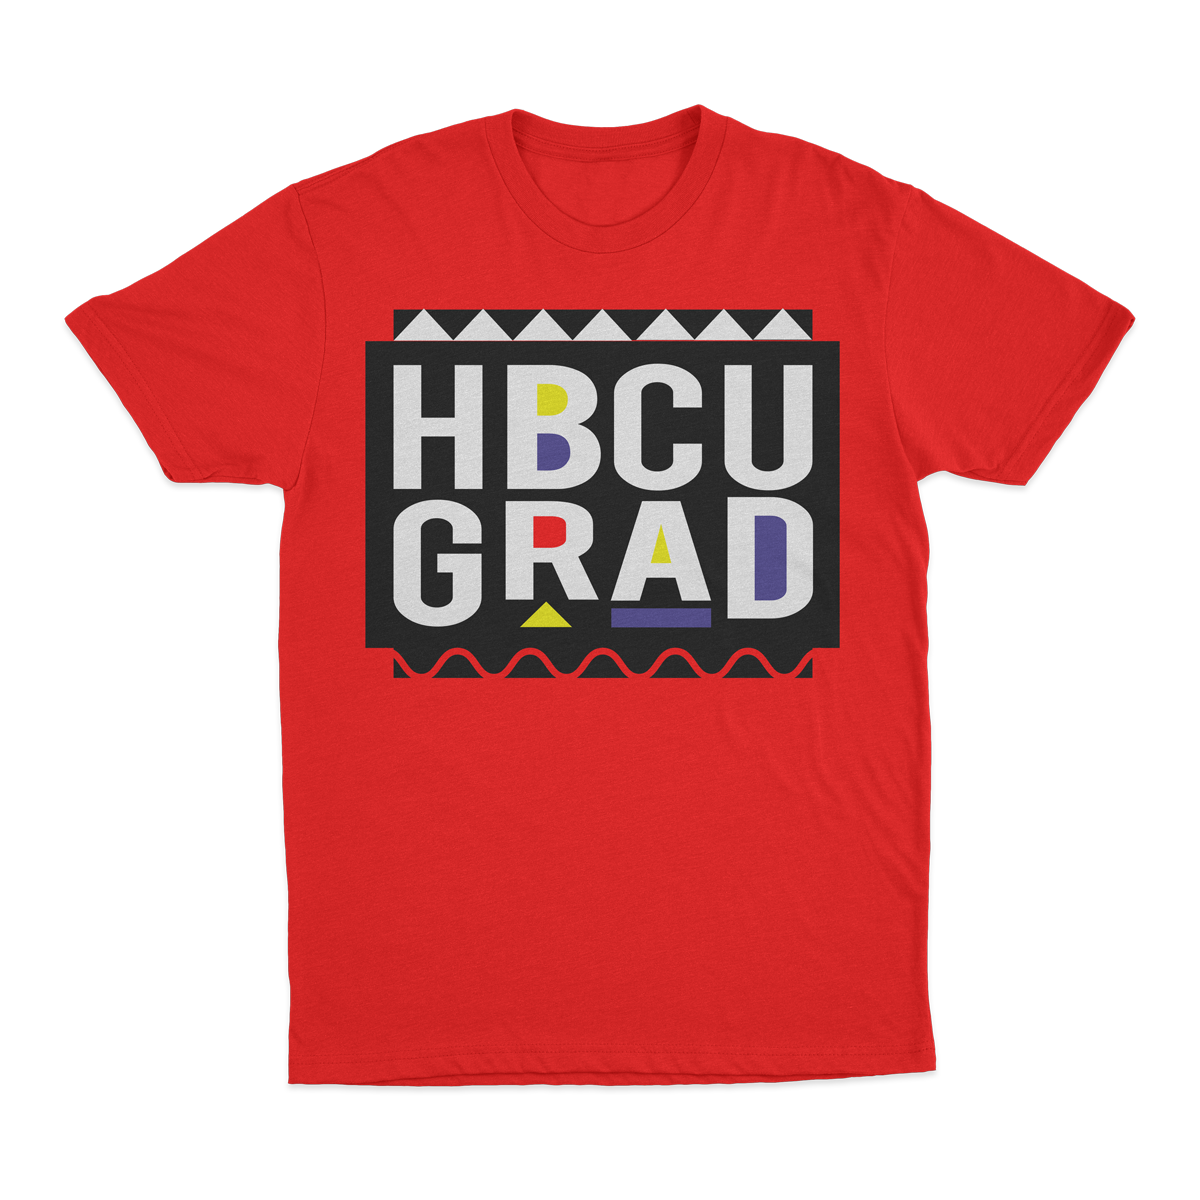 HBCU GRAD | Martin Inspired | Tshirt - Red